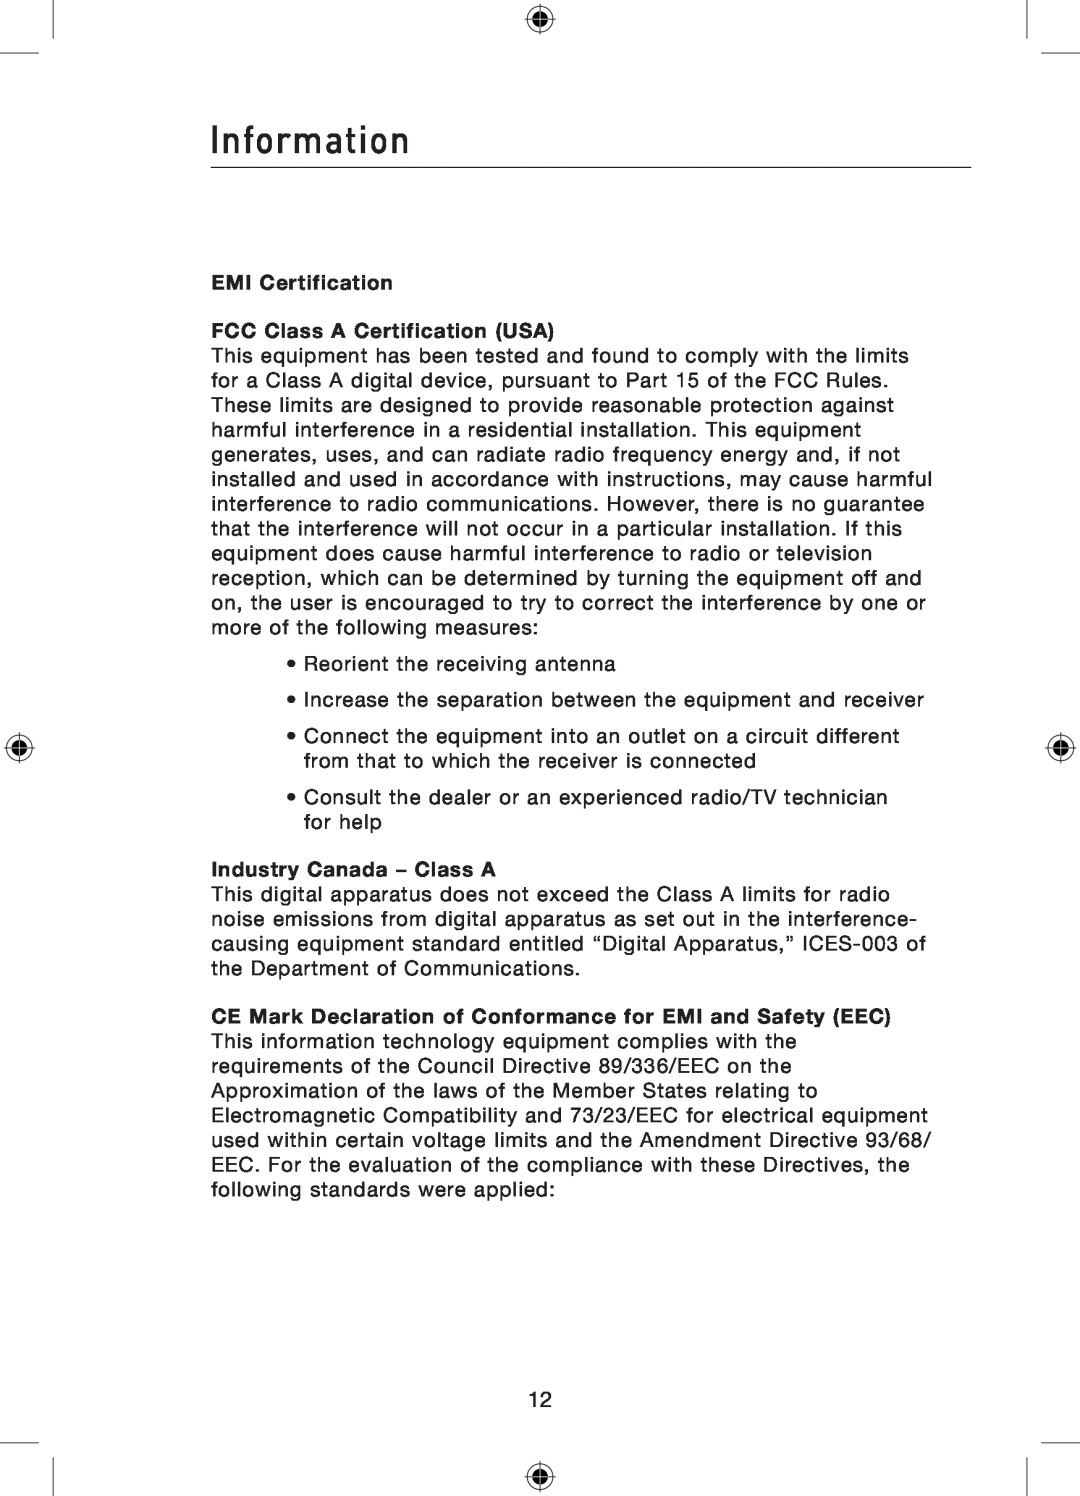 Belkin P75179ea manual Information, EMI Certification FCC Class A Certification USA, Industry Canada - Class A 